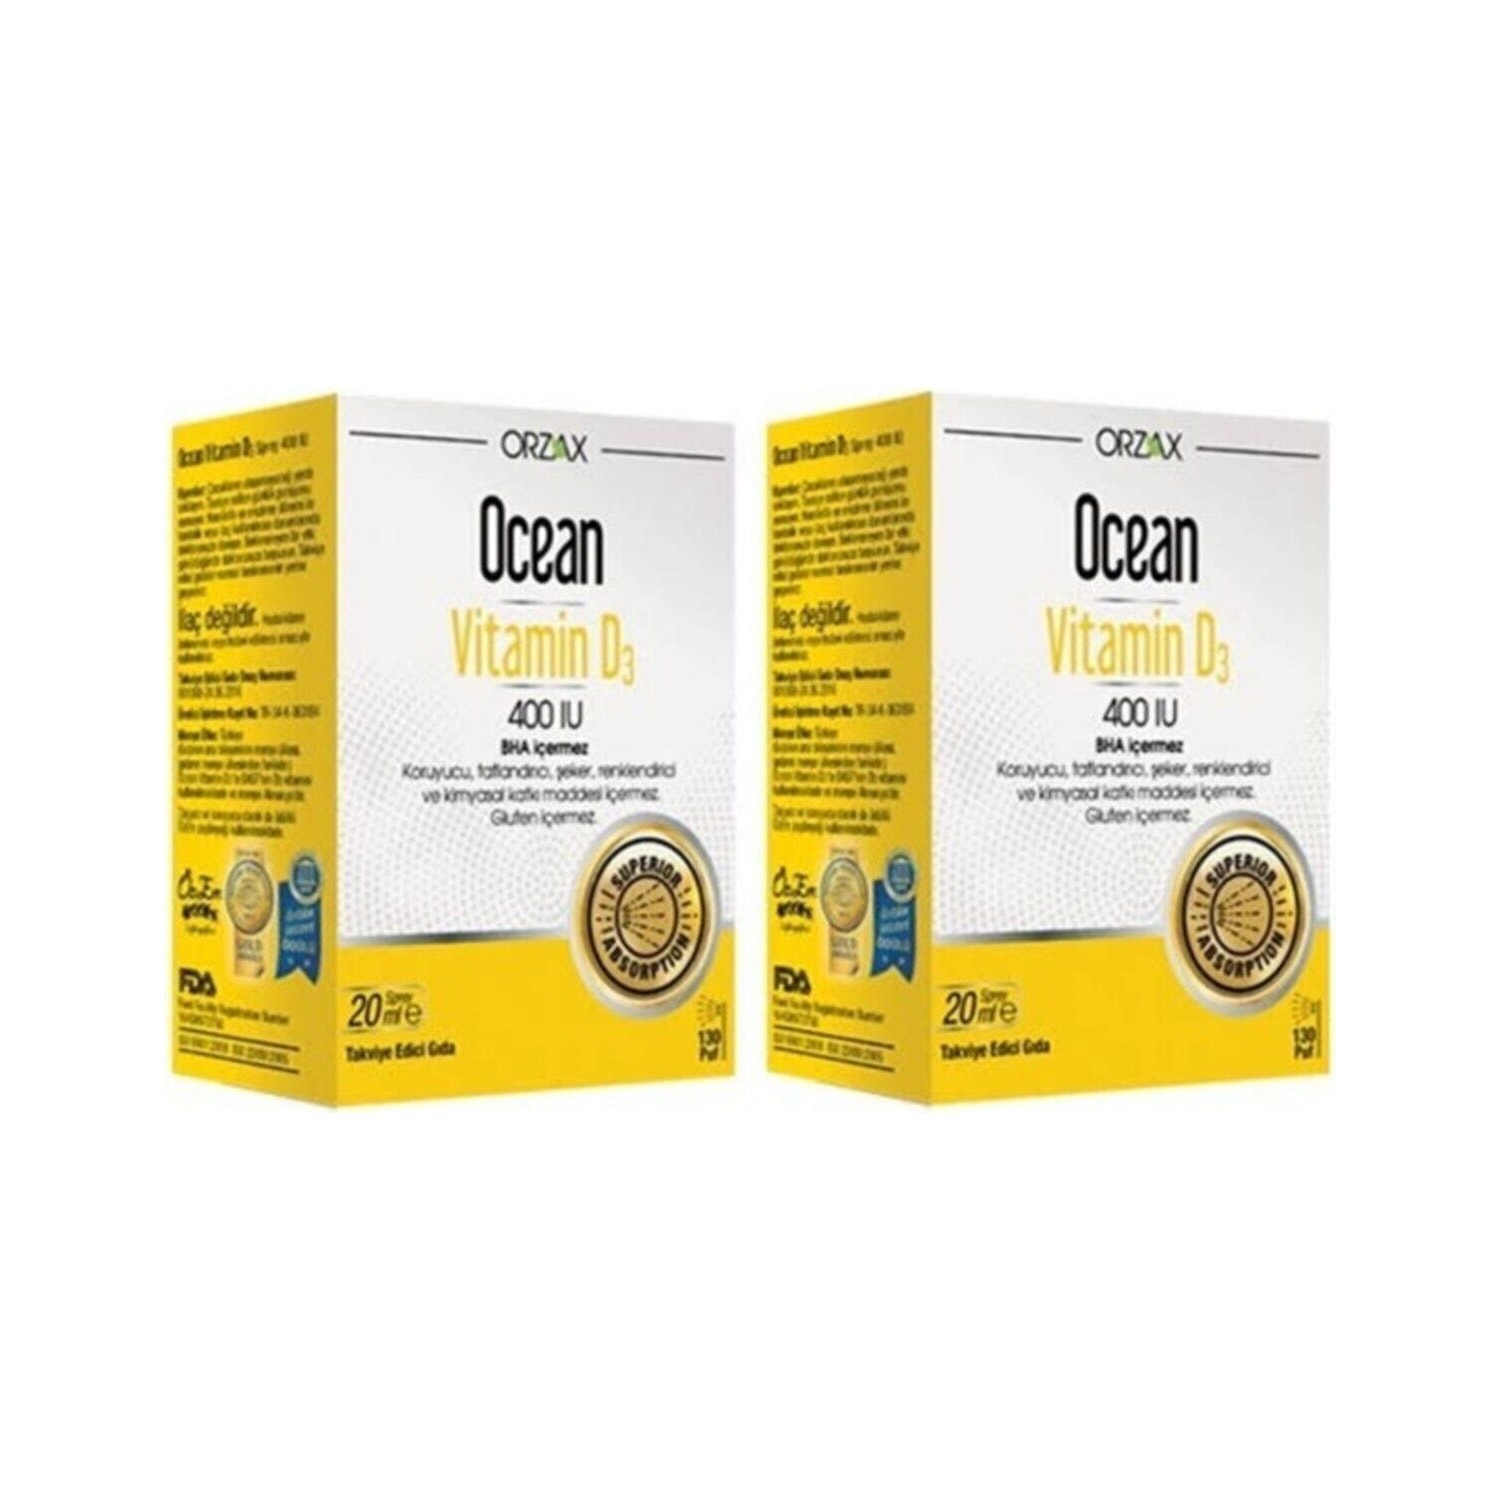 Спрей витамин D3 Ocean 400 МЕ, 2 упаковки по 20 мл